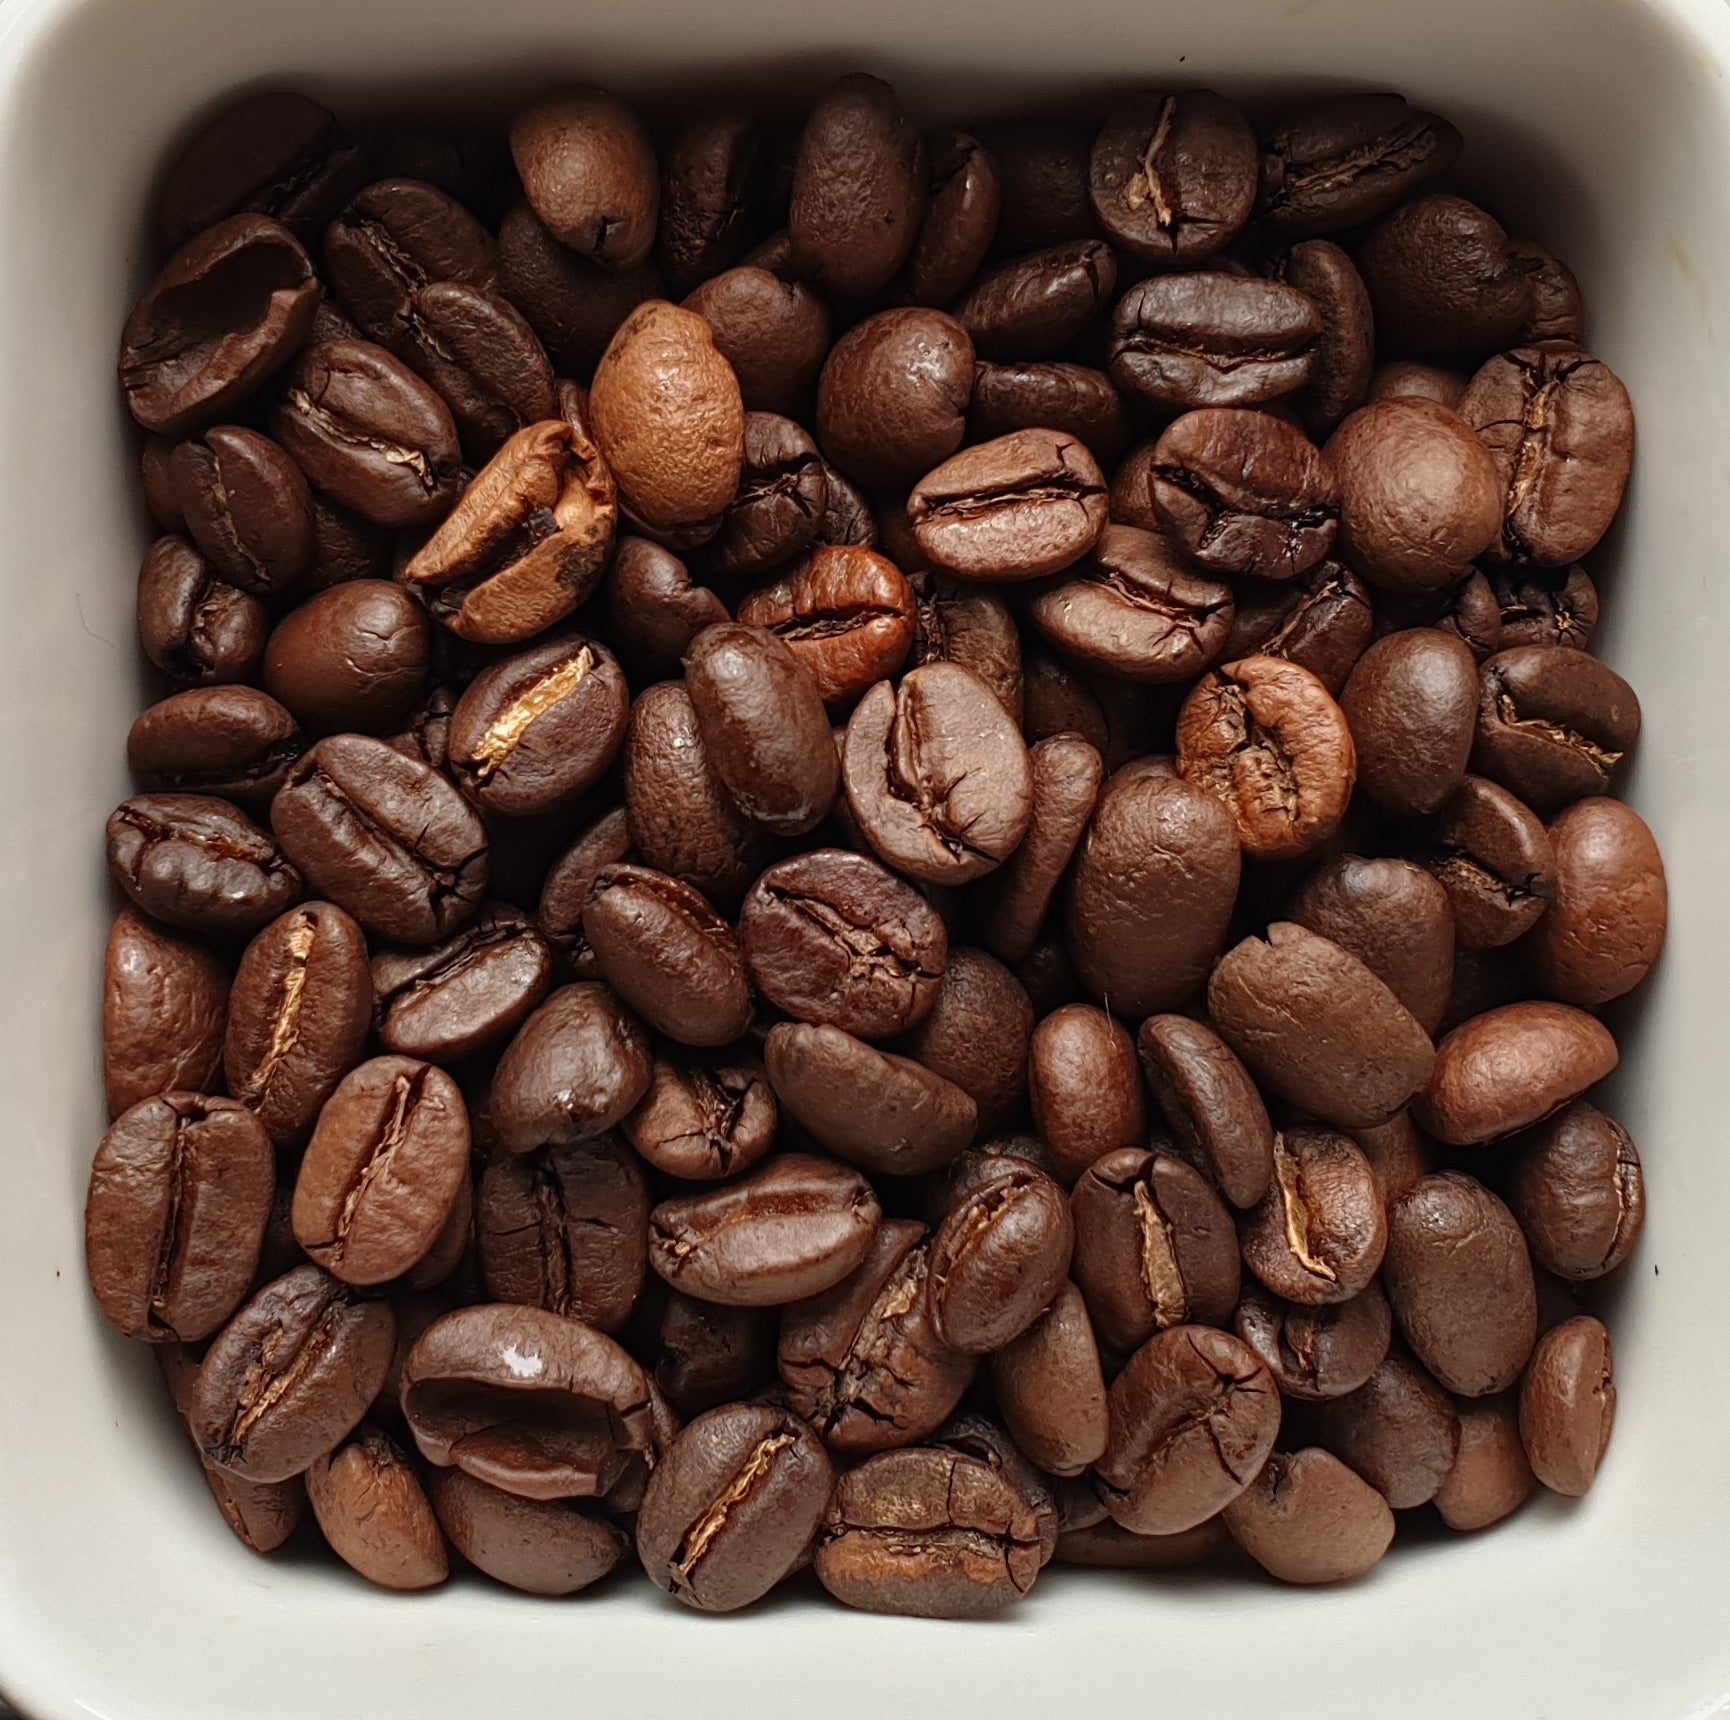 coffee beans - vienna blend